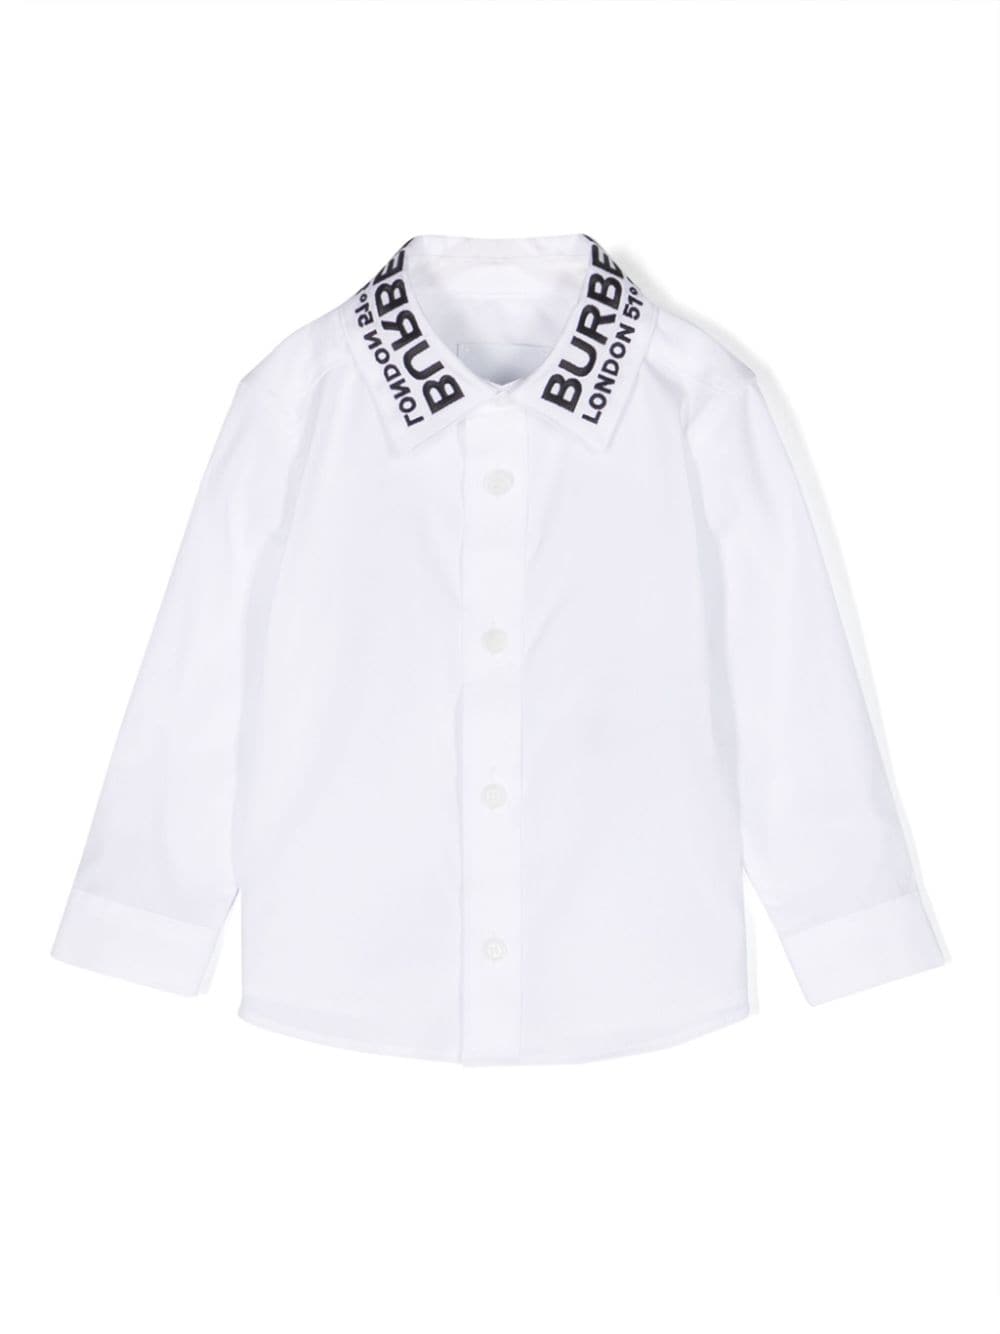 White cotton poplin baby boy BURBERRY shirt | Carofiglio Junior